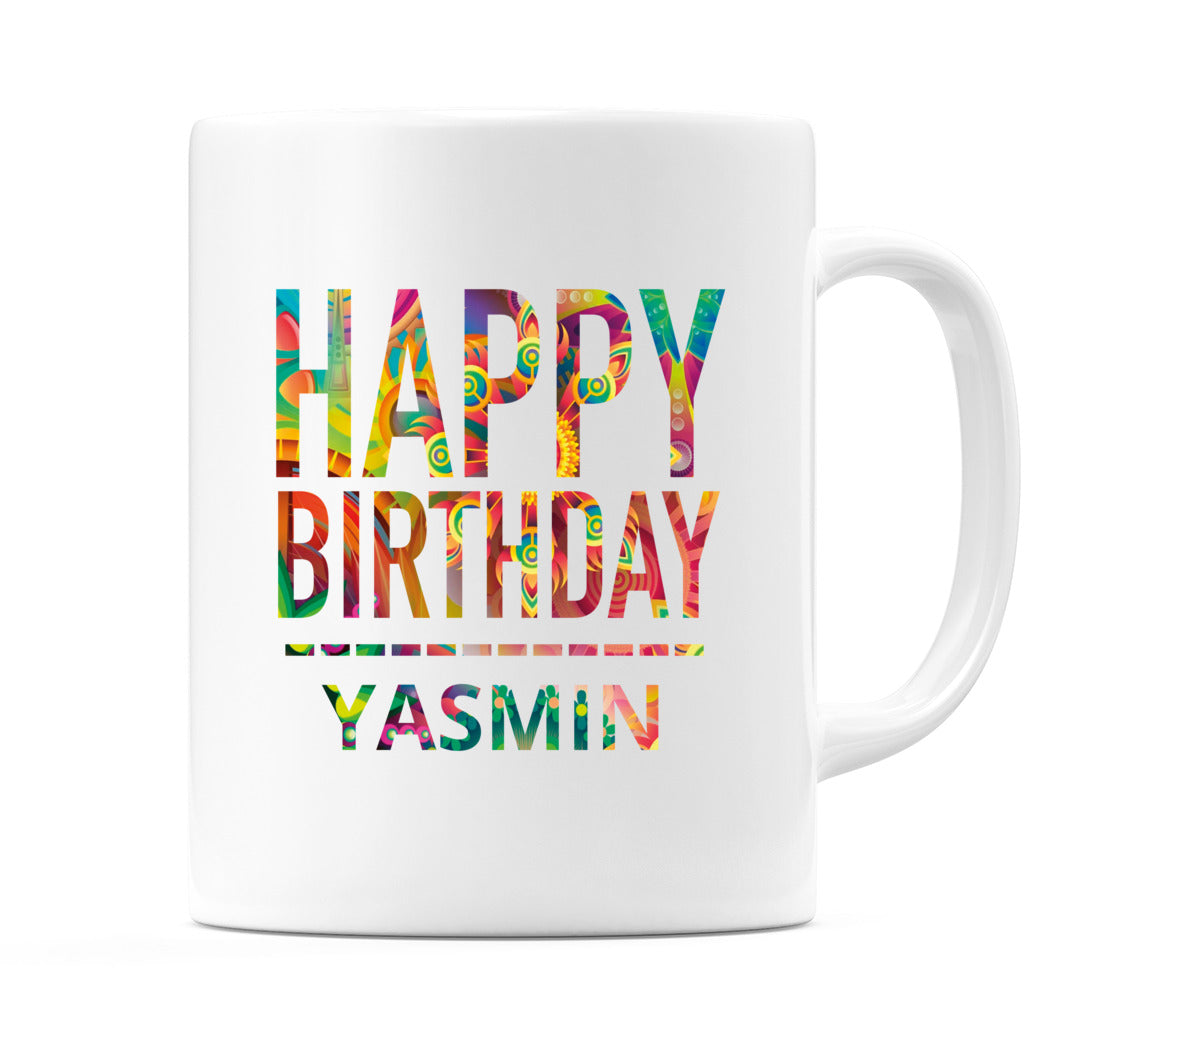 Happy Birthday Yasmin (Tie Dye Effect) Mug Cup by WeDoMugs